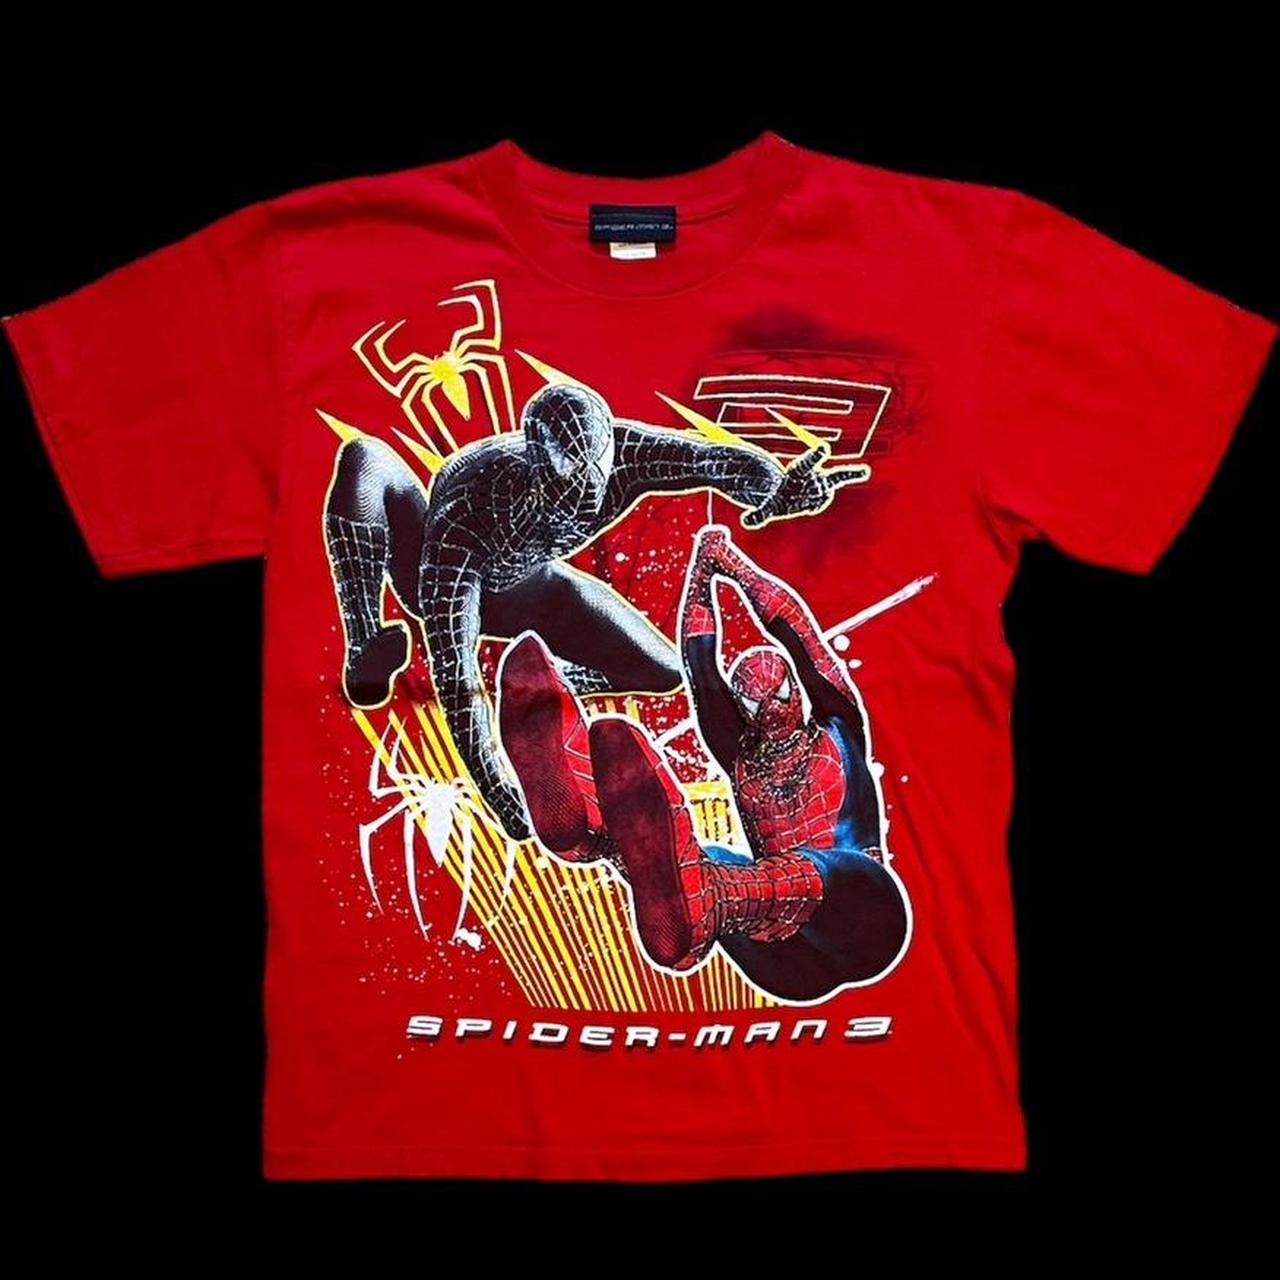 SPIDER-MAN 3 2007 black/red suit t shirt with 3D... - Depop